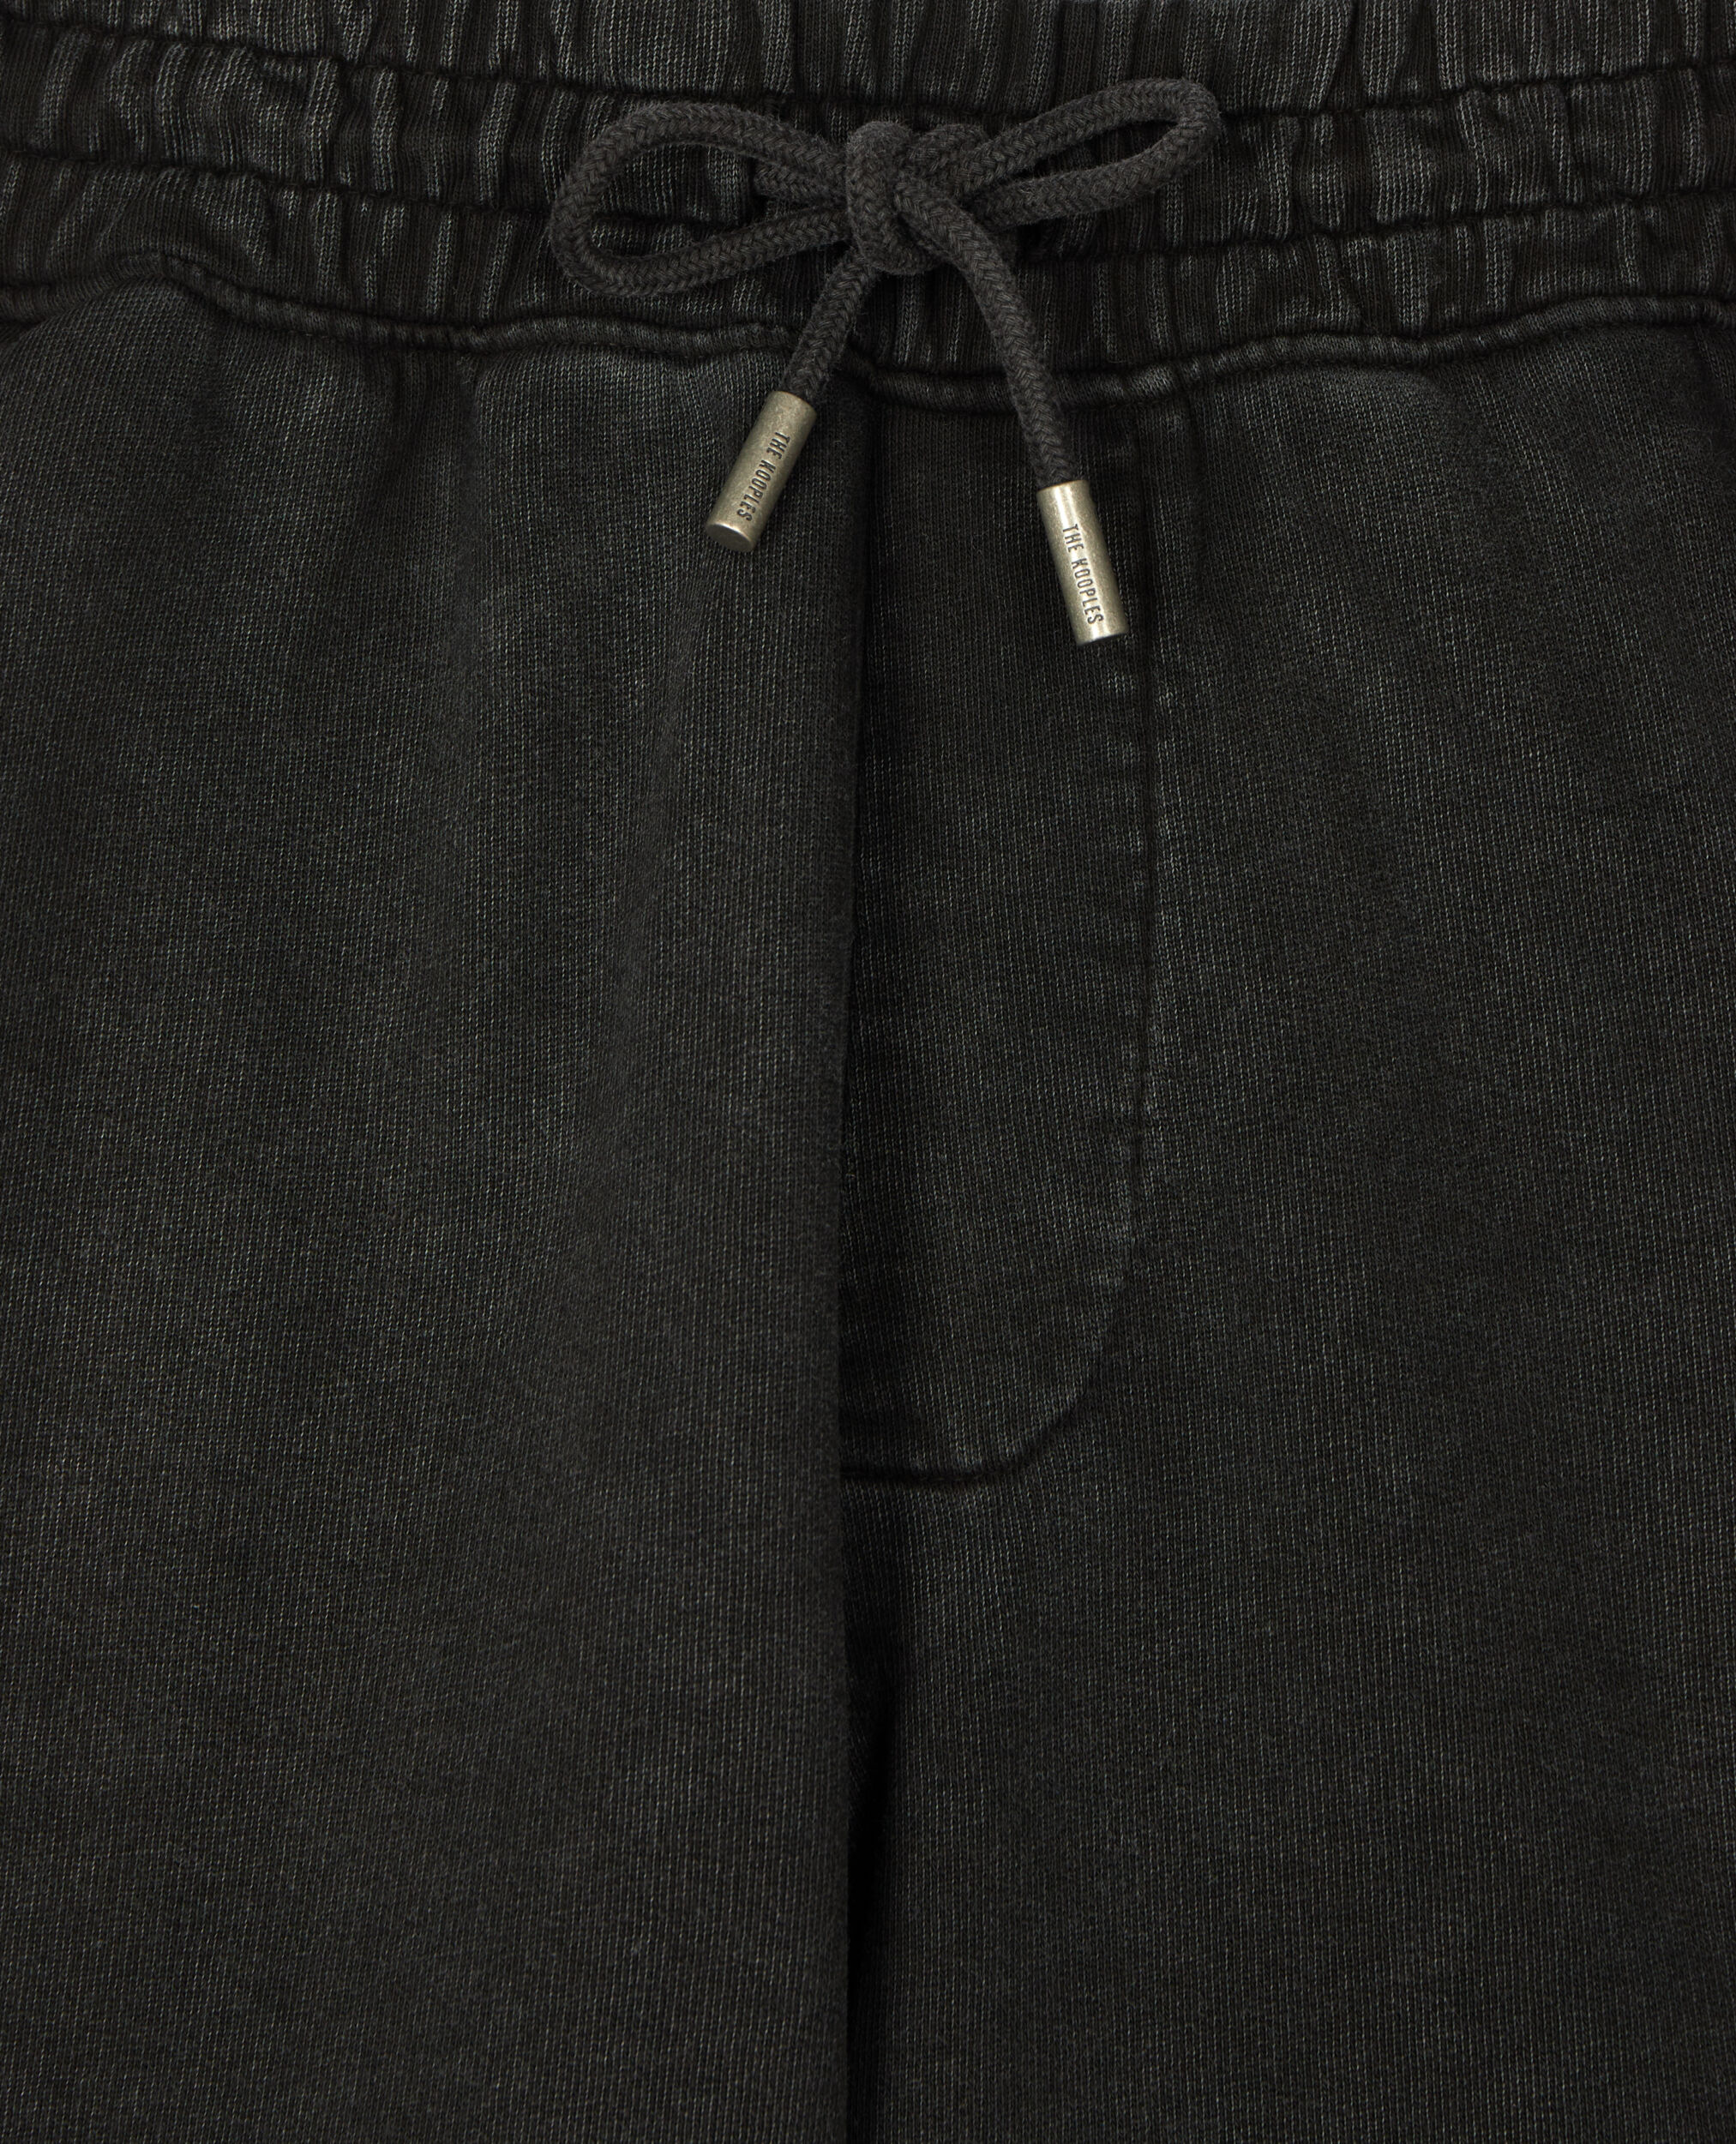 Pantalones cortos negros algodón, BLACK WASHED, hi-res image number null